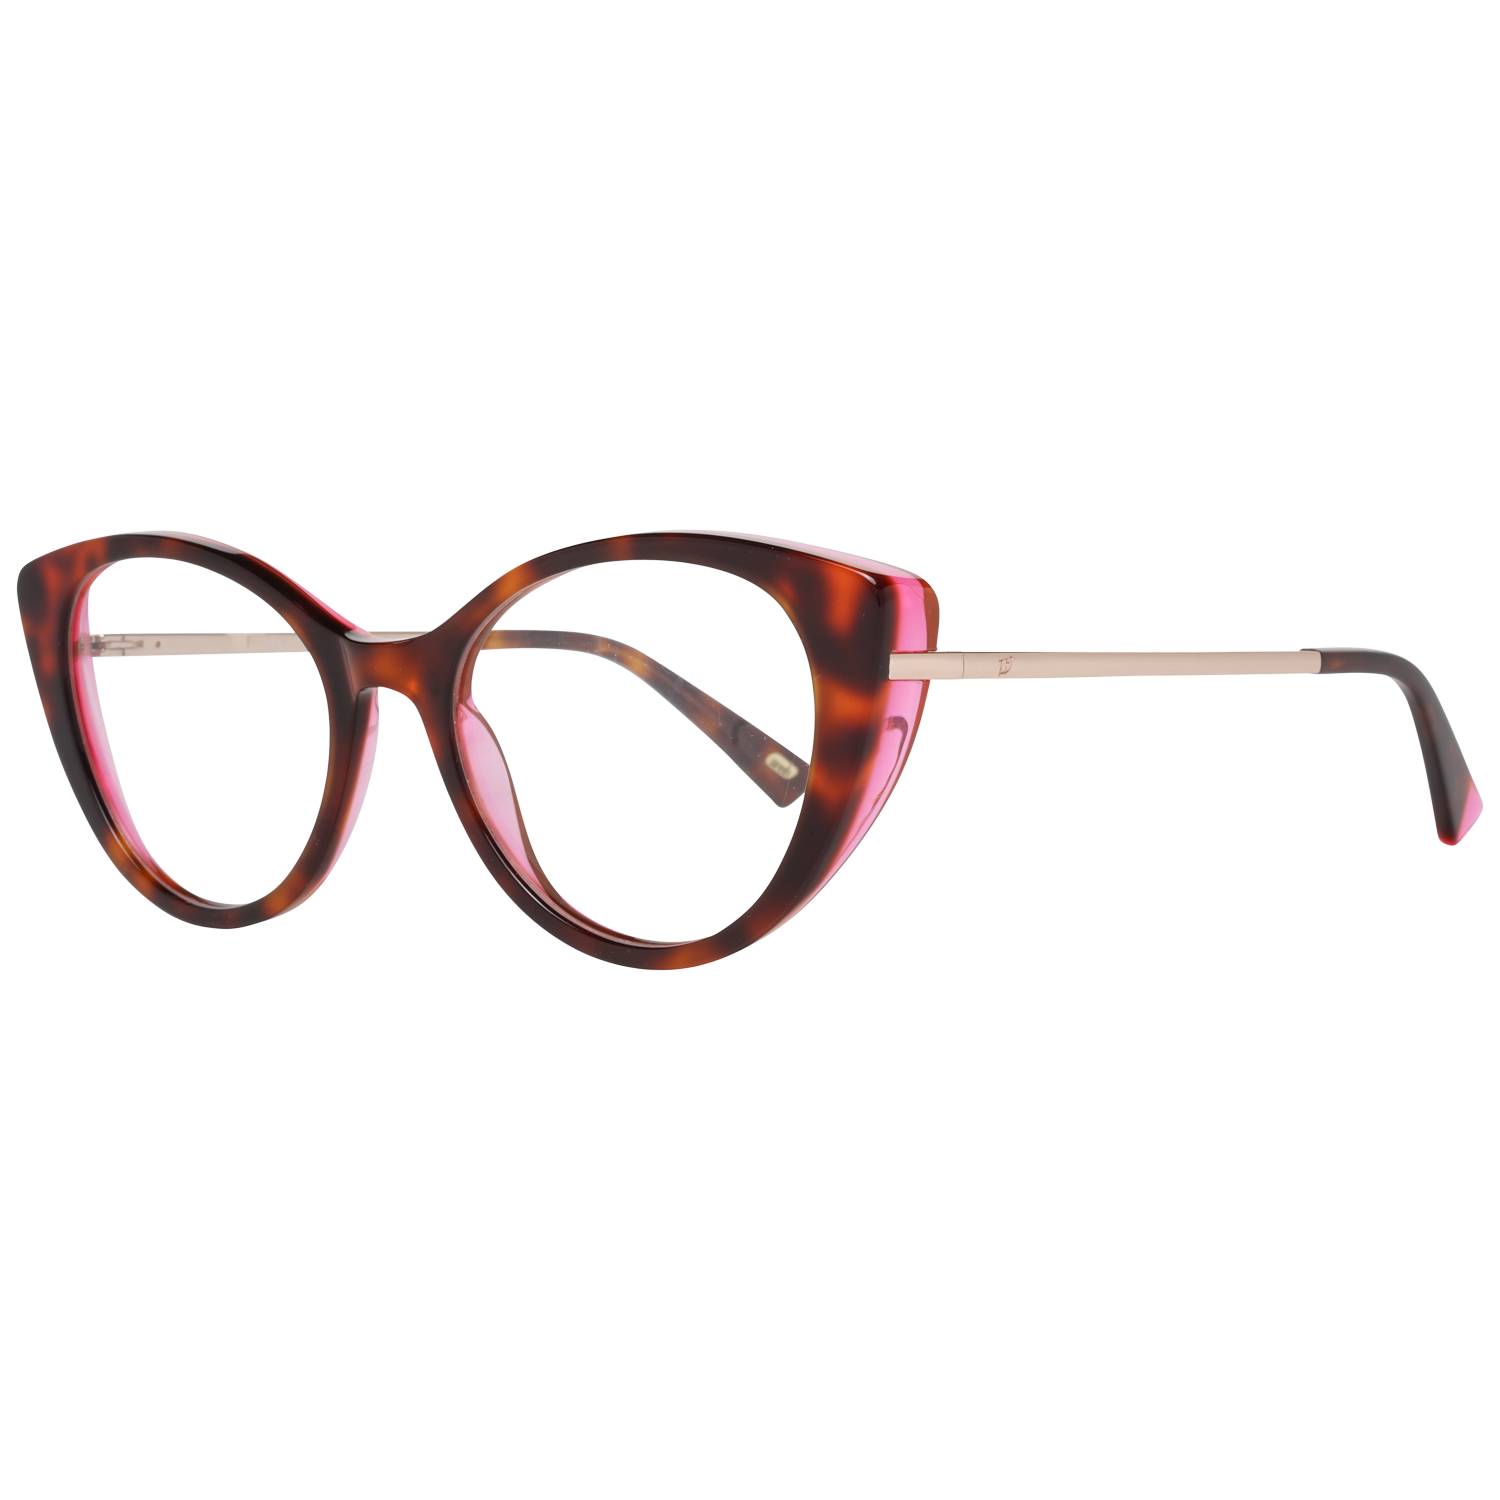 Web Frames Web Prescription Glasses Optical Frame WE5288 056 51 Eyeglasses Eyewear UK USA Australia 